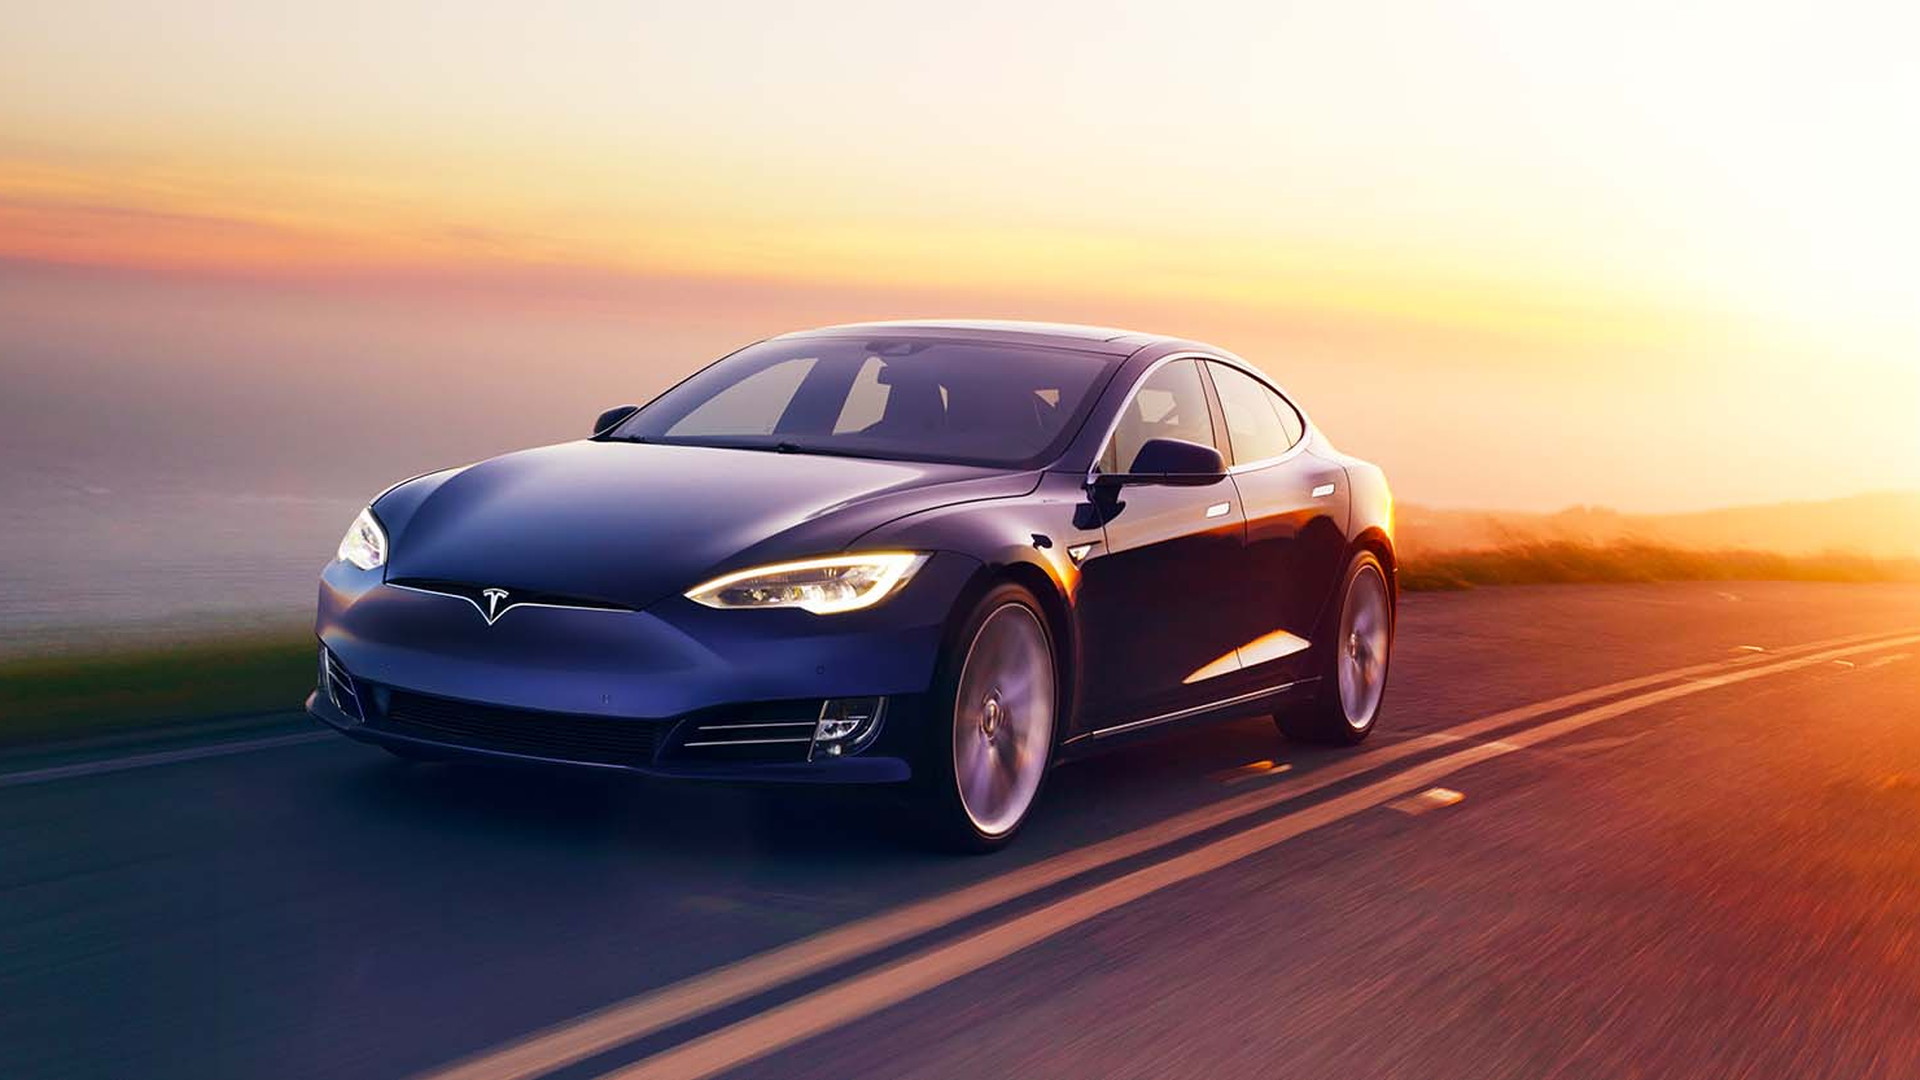 Sinewi schuld krab Tesla P100D 'Ludicrous Plus' mode makes electric car even faster